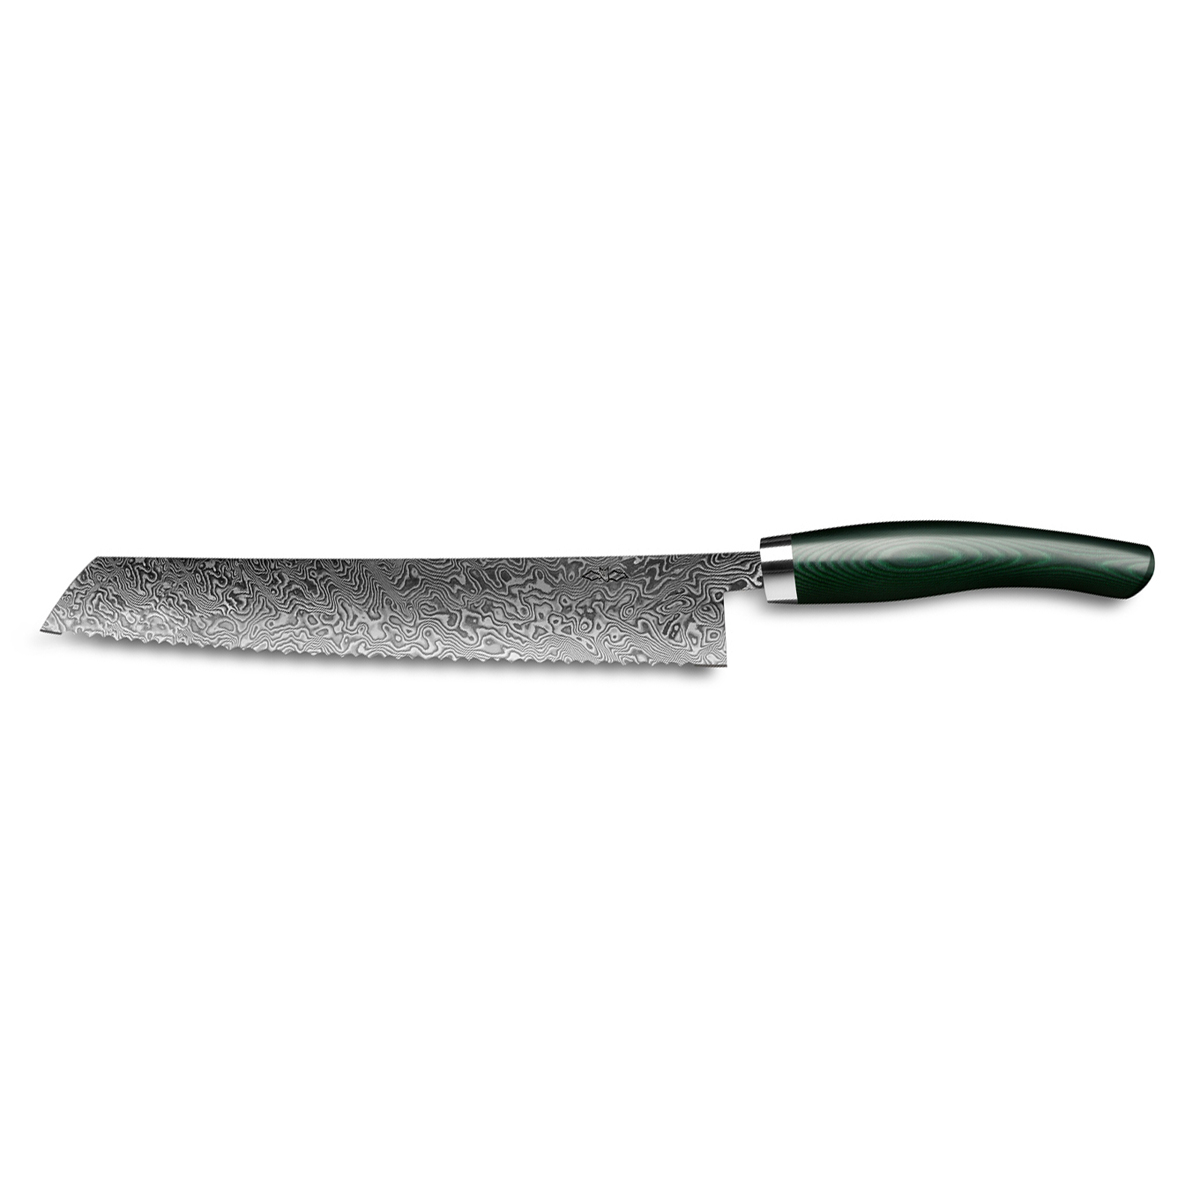 Nesmuk Exklusiv C 90 Damast Brotmesser 27 cm - Griff Micarta grün